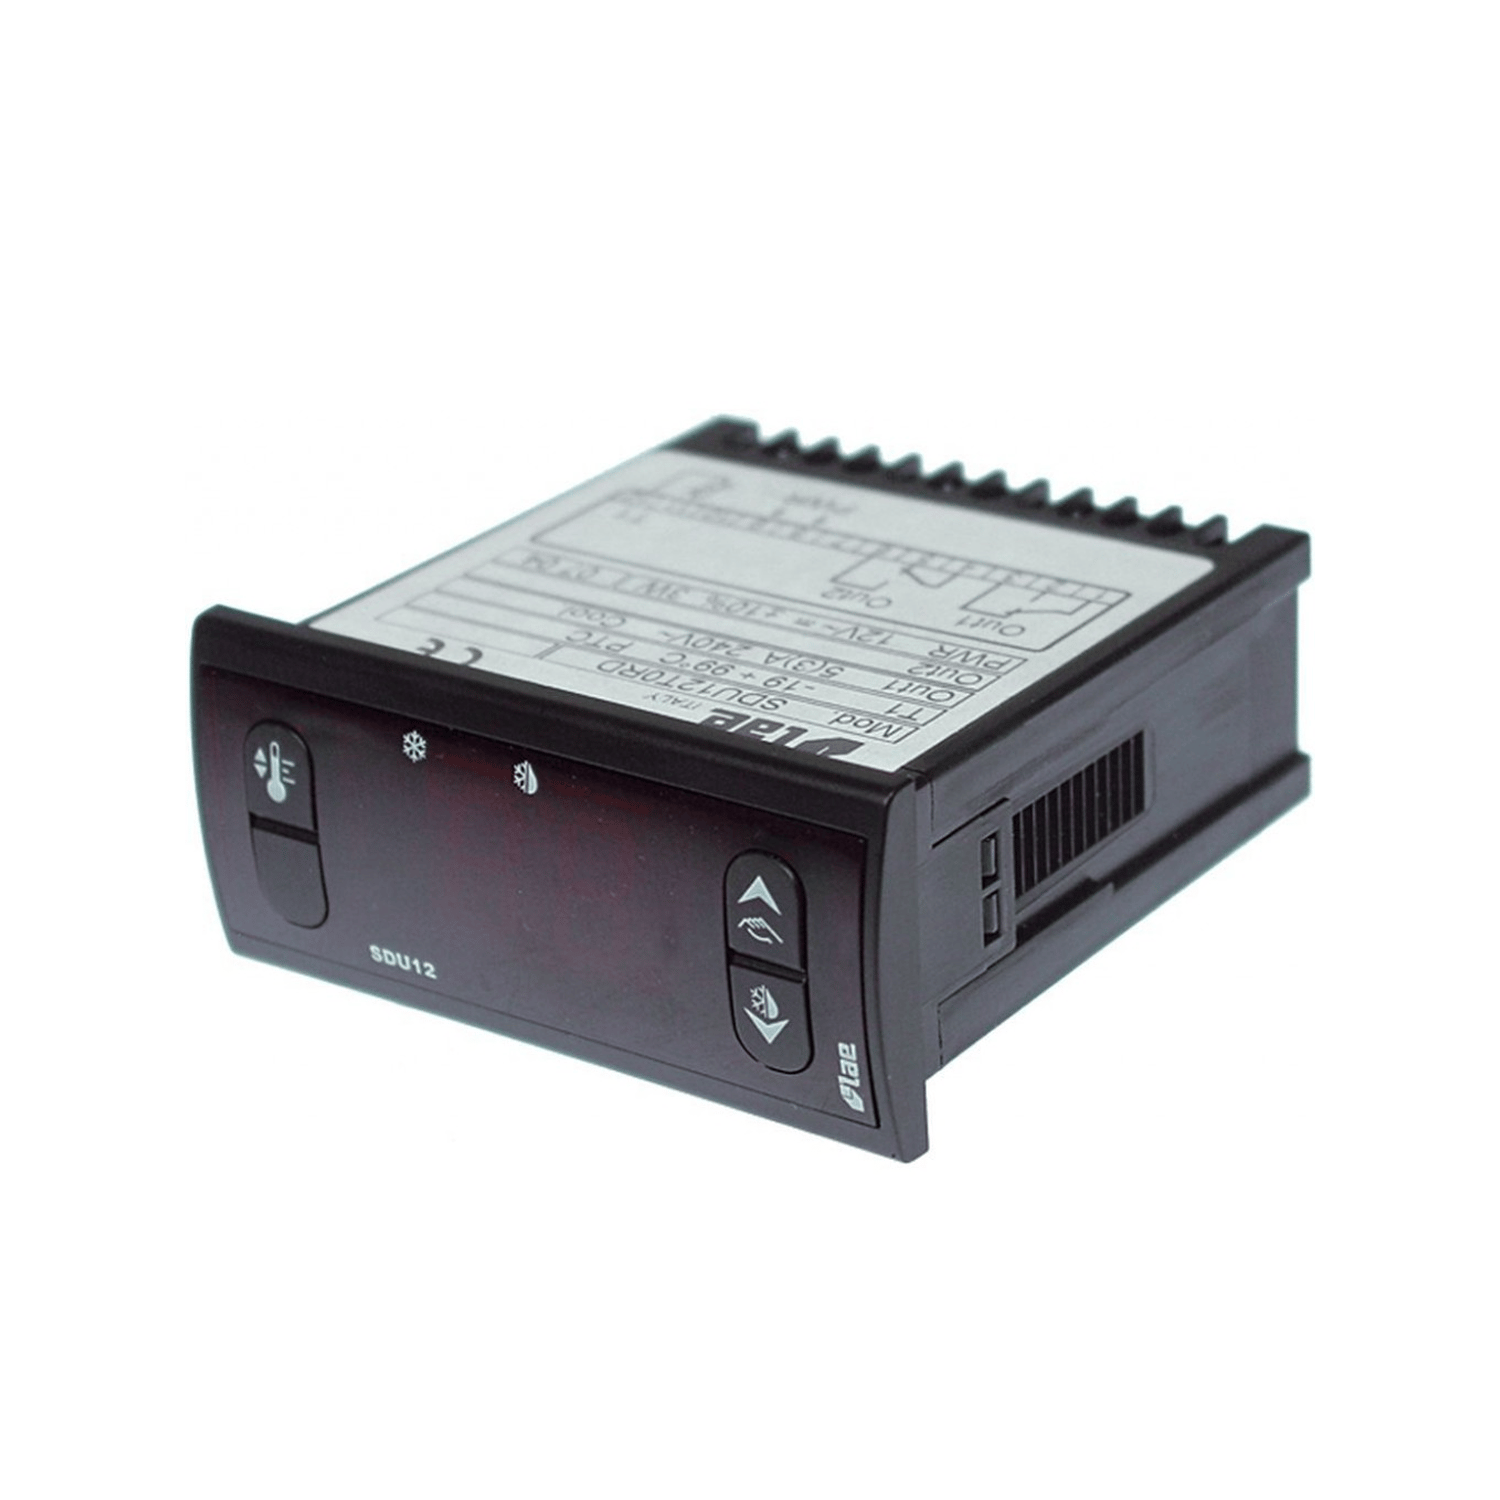 Controllore per celle frigorifere LAE SDU12T0RD, 12V AC/DC PTC